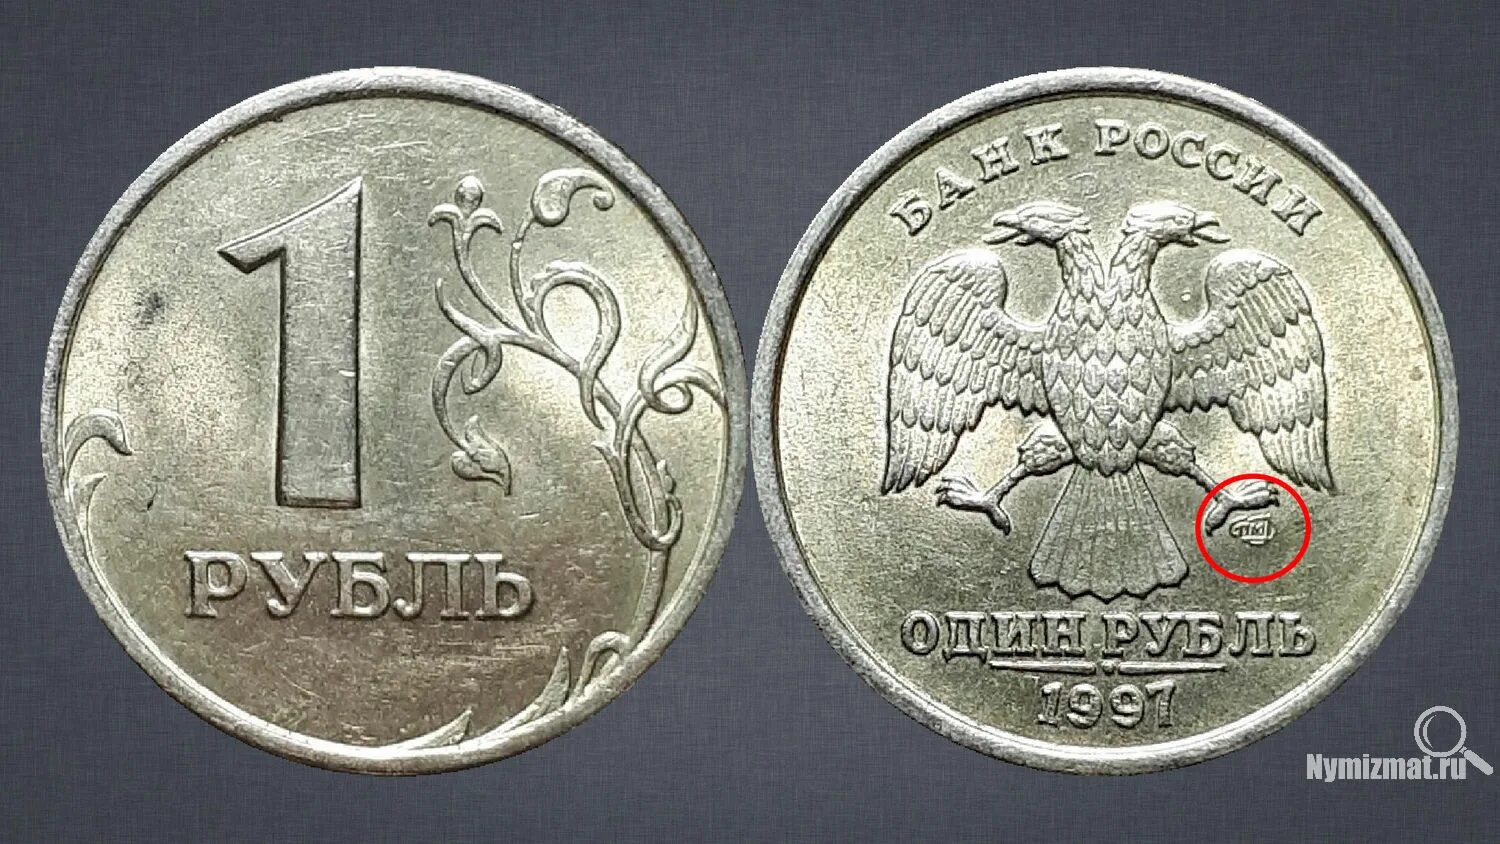 1 к 1997 г. ММД монета рубль 1997. Рубль 1997 ММД. Монета 1 рубль 1997 СПМД. Редкие монеты 1 рубль 1997.